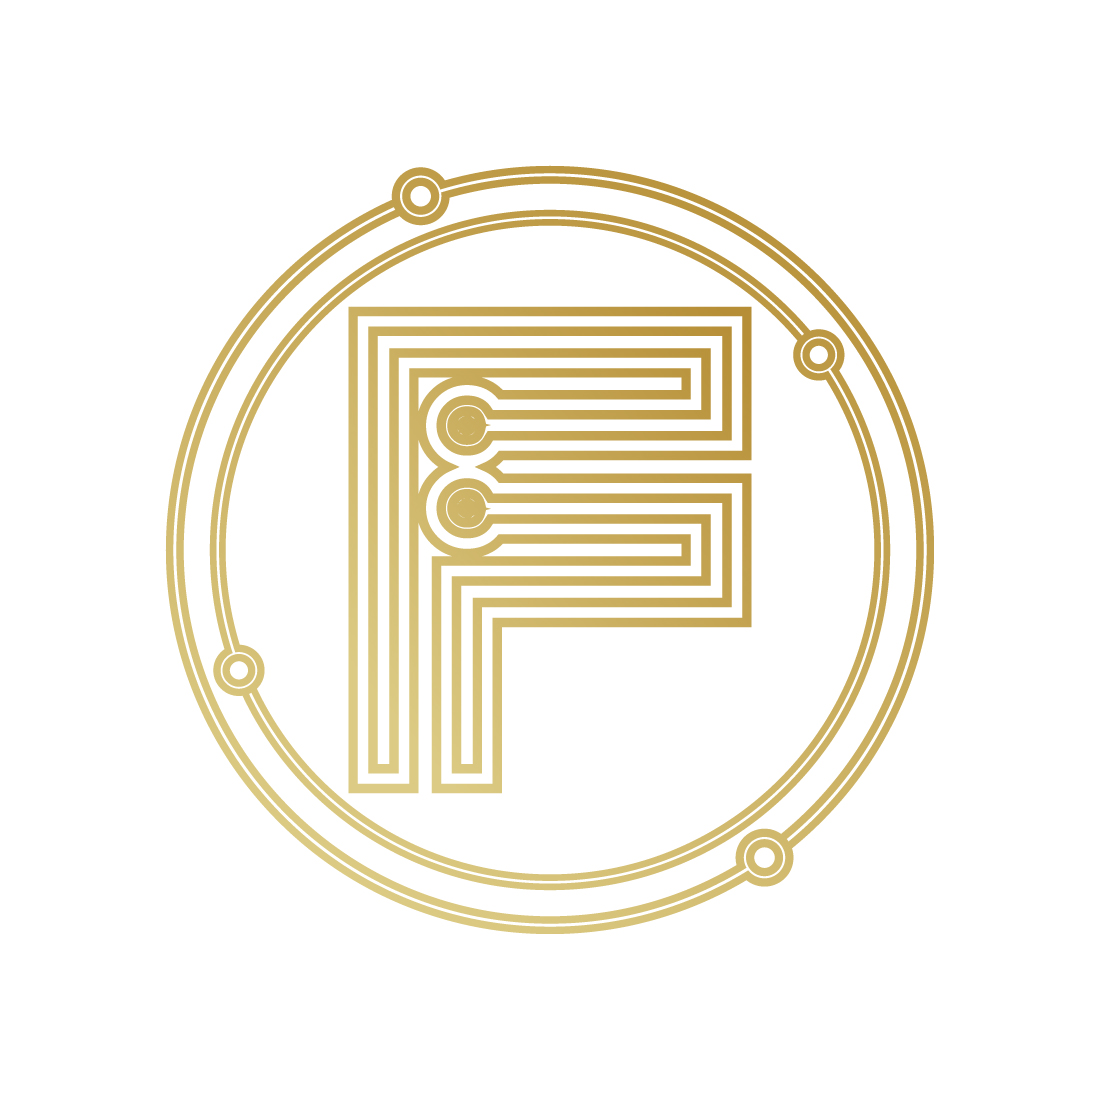 Initials F letters logo design vector images F technology logo design F logo golden color circle icon design preview image.